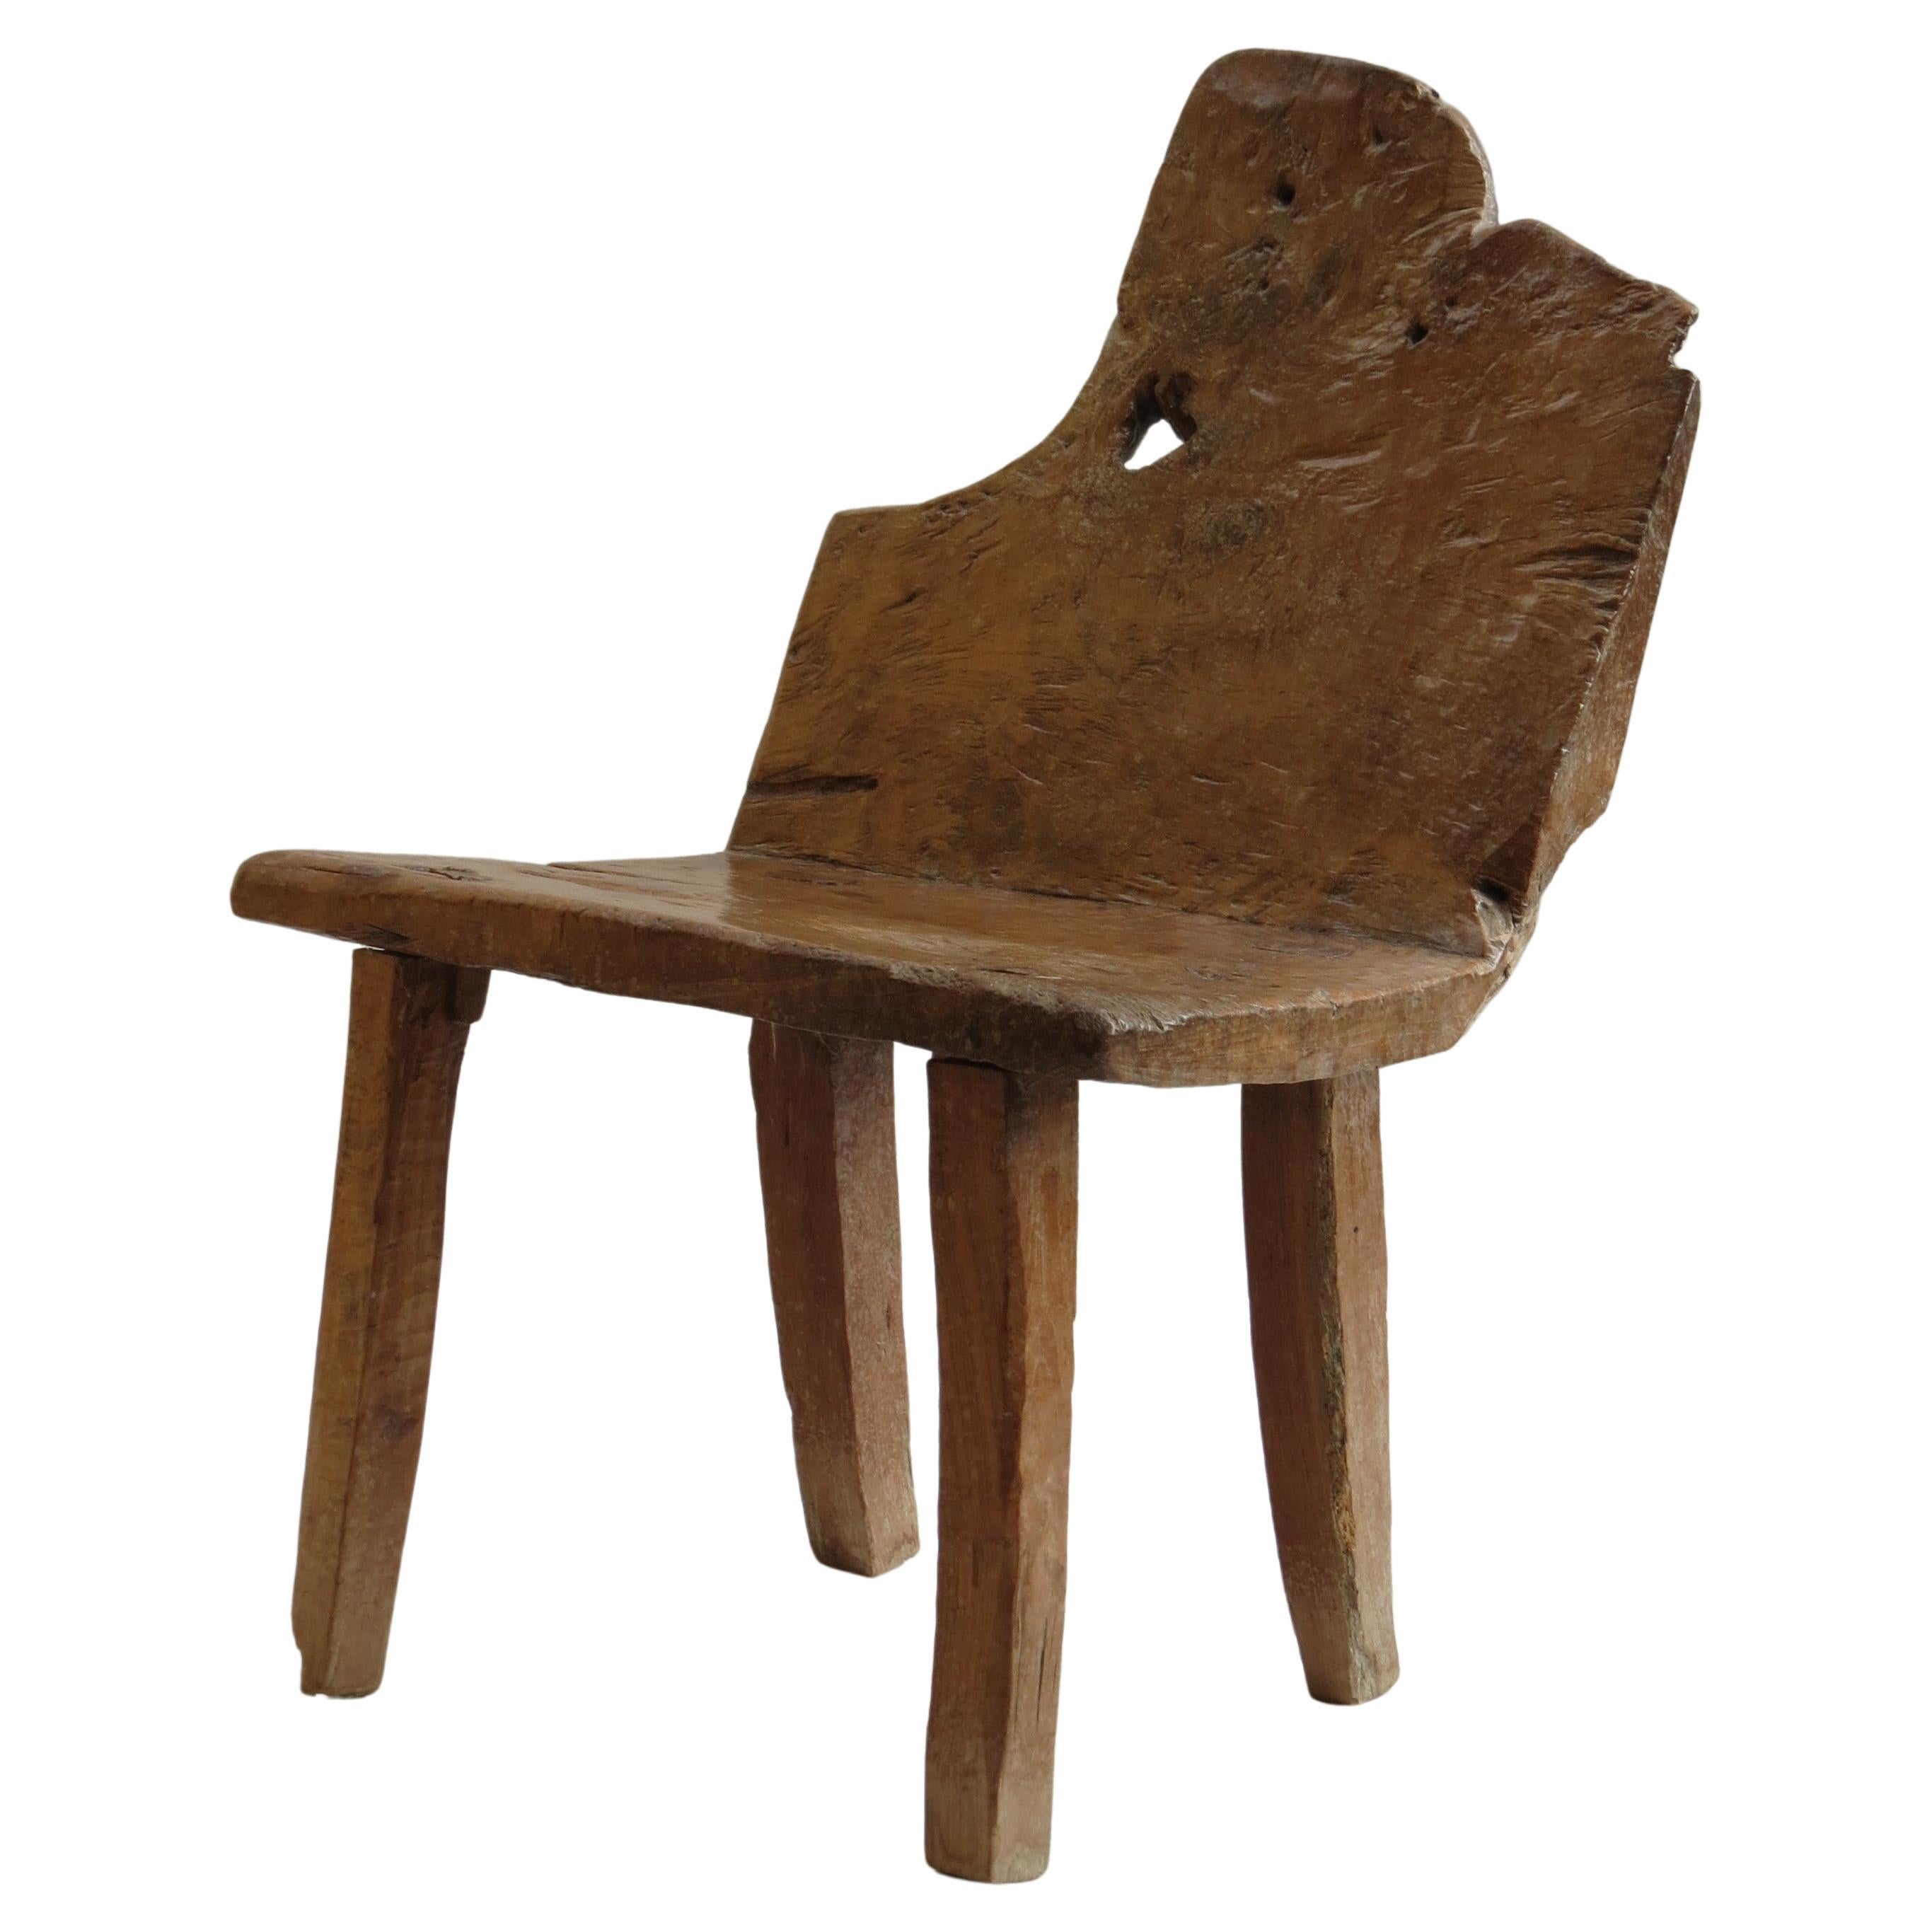 Antique Rare Primitive Walnut Chair 19th Century English Wabi Sabi style For Sale